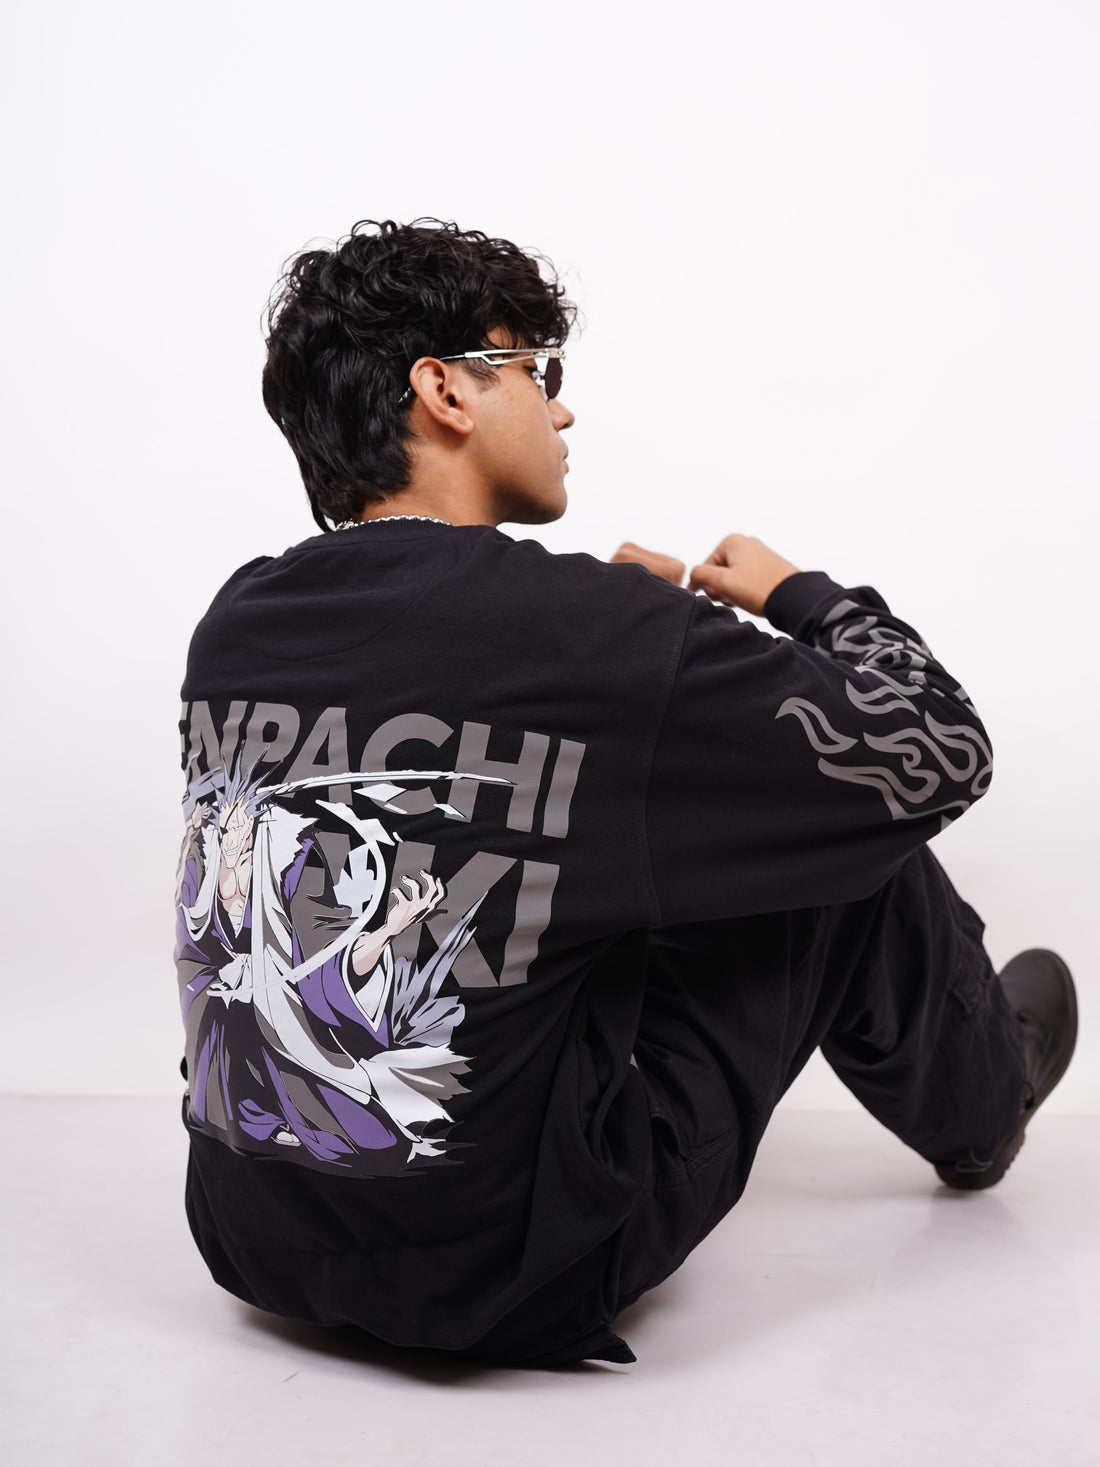 Kenpachi Zaraki (Reflective) - Bleach Heavyweight Baggy Sweatshirt For Men And Women